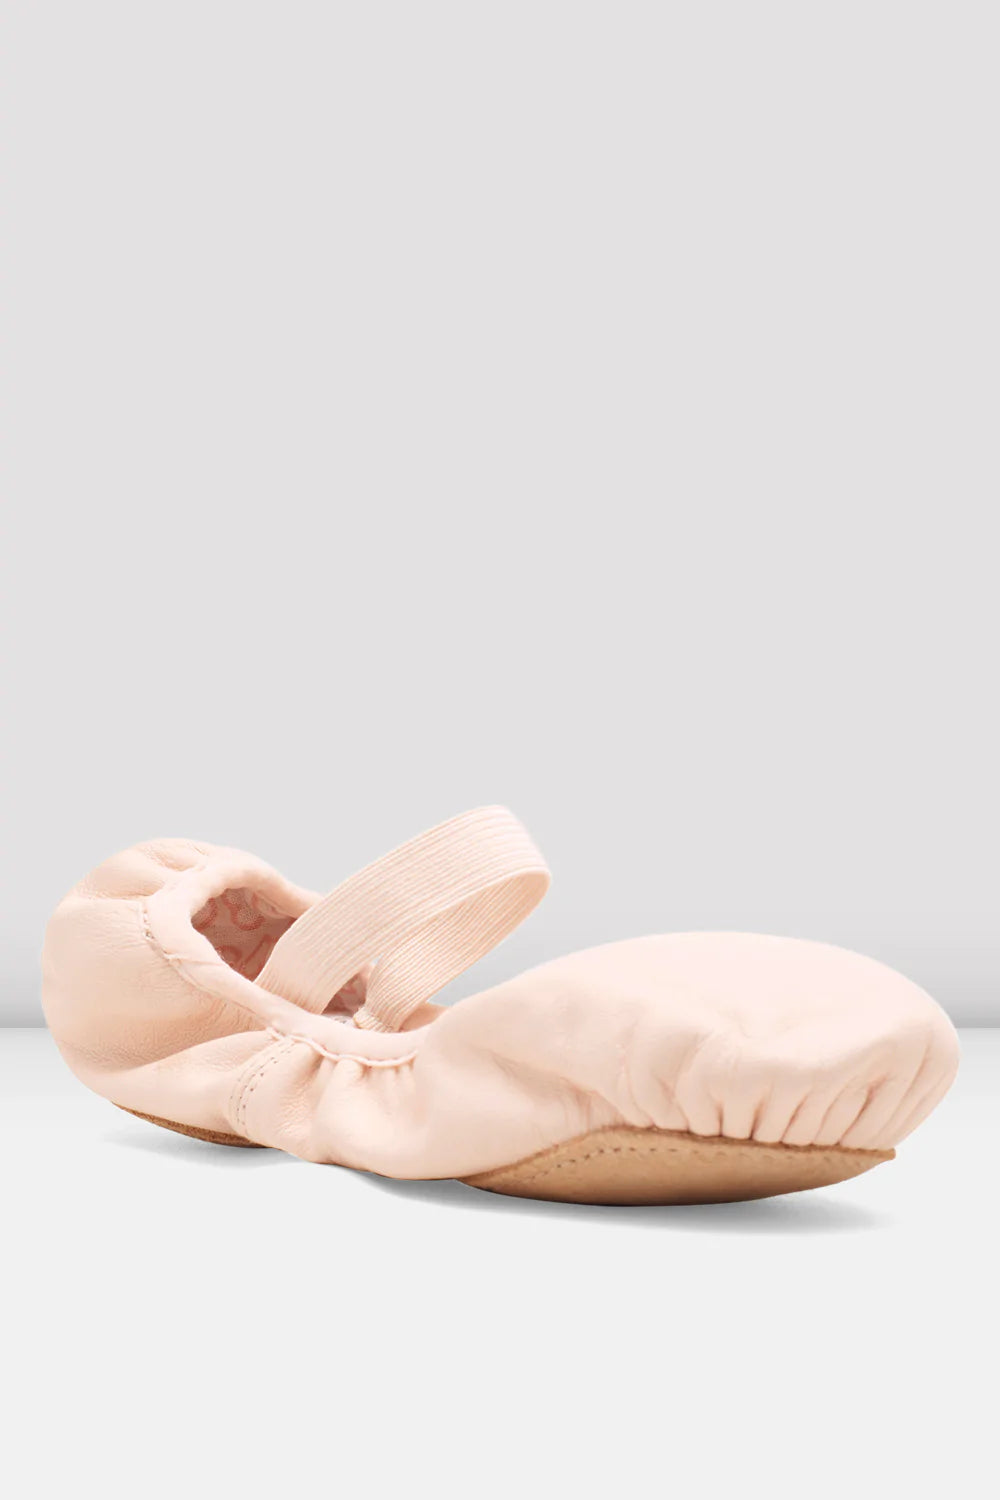 Bloch Childrens Belle Leather Ballet Slippers